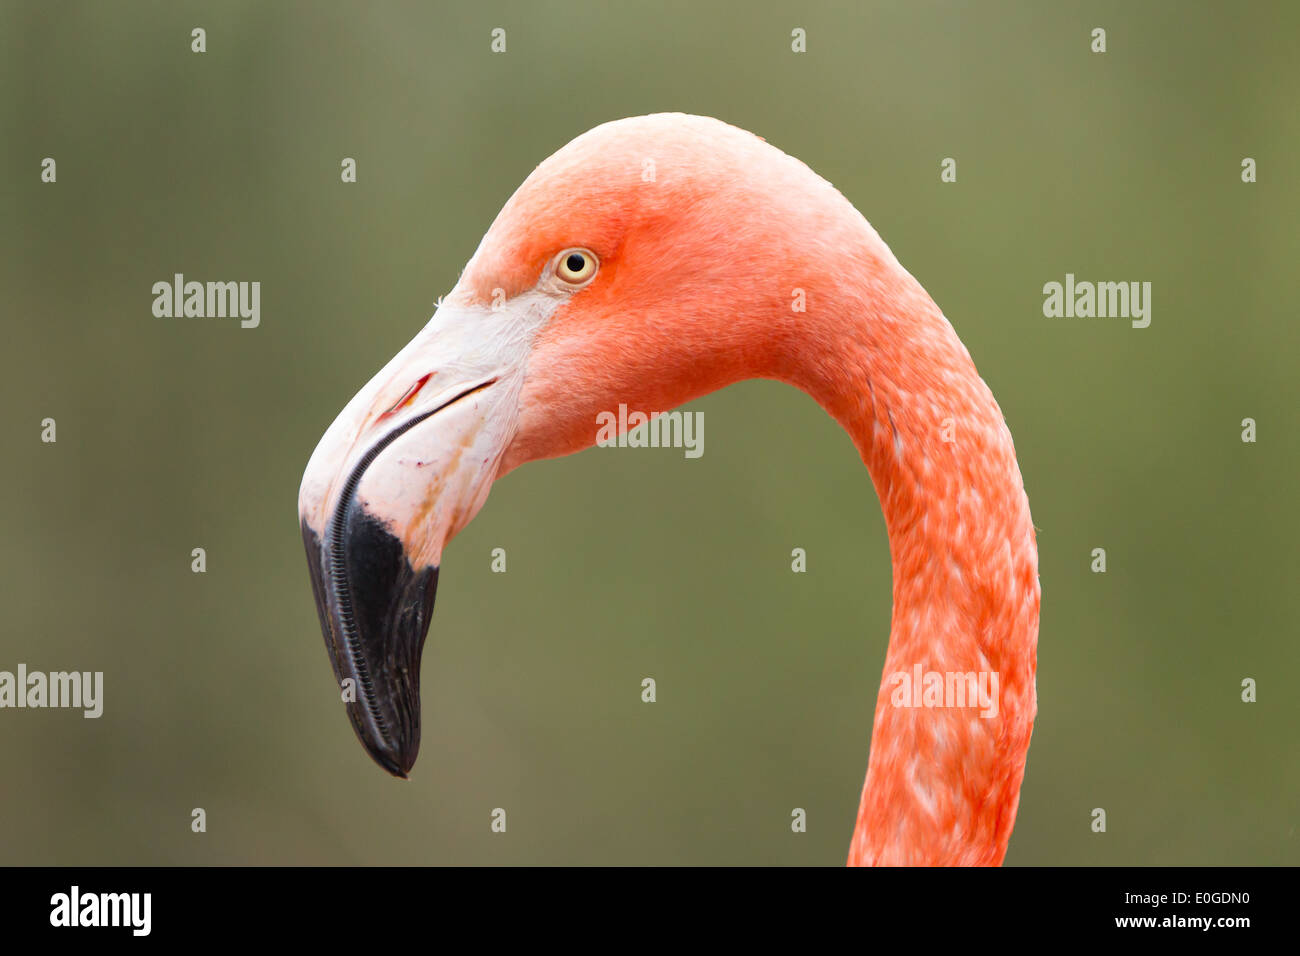 Closeup shot of pink flamingo on green background Stock Photo